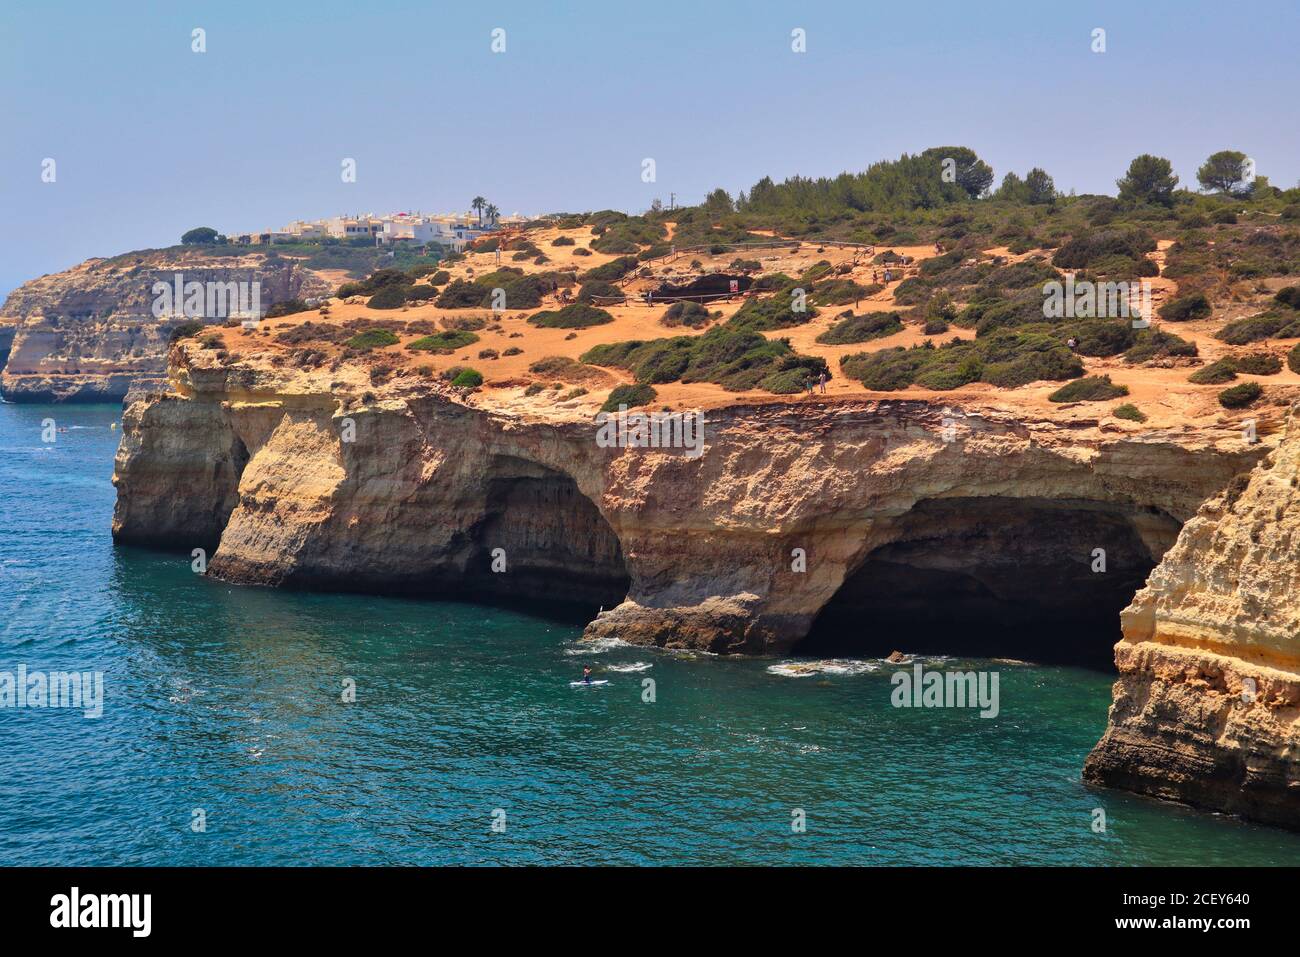 Sandsteinfelsen, die die Benagil-Höhle an der Algarve bilden. Grotte mit Atlantik davor. Stockfoto